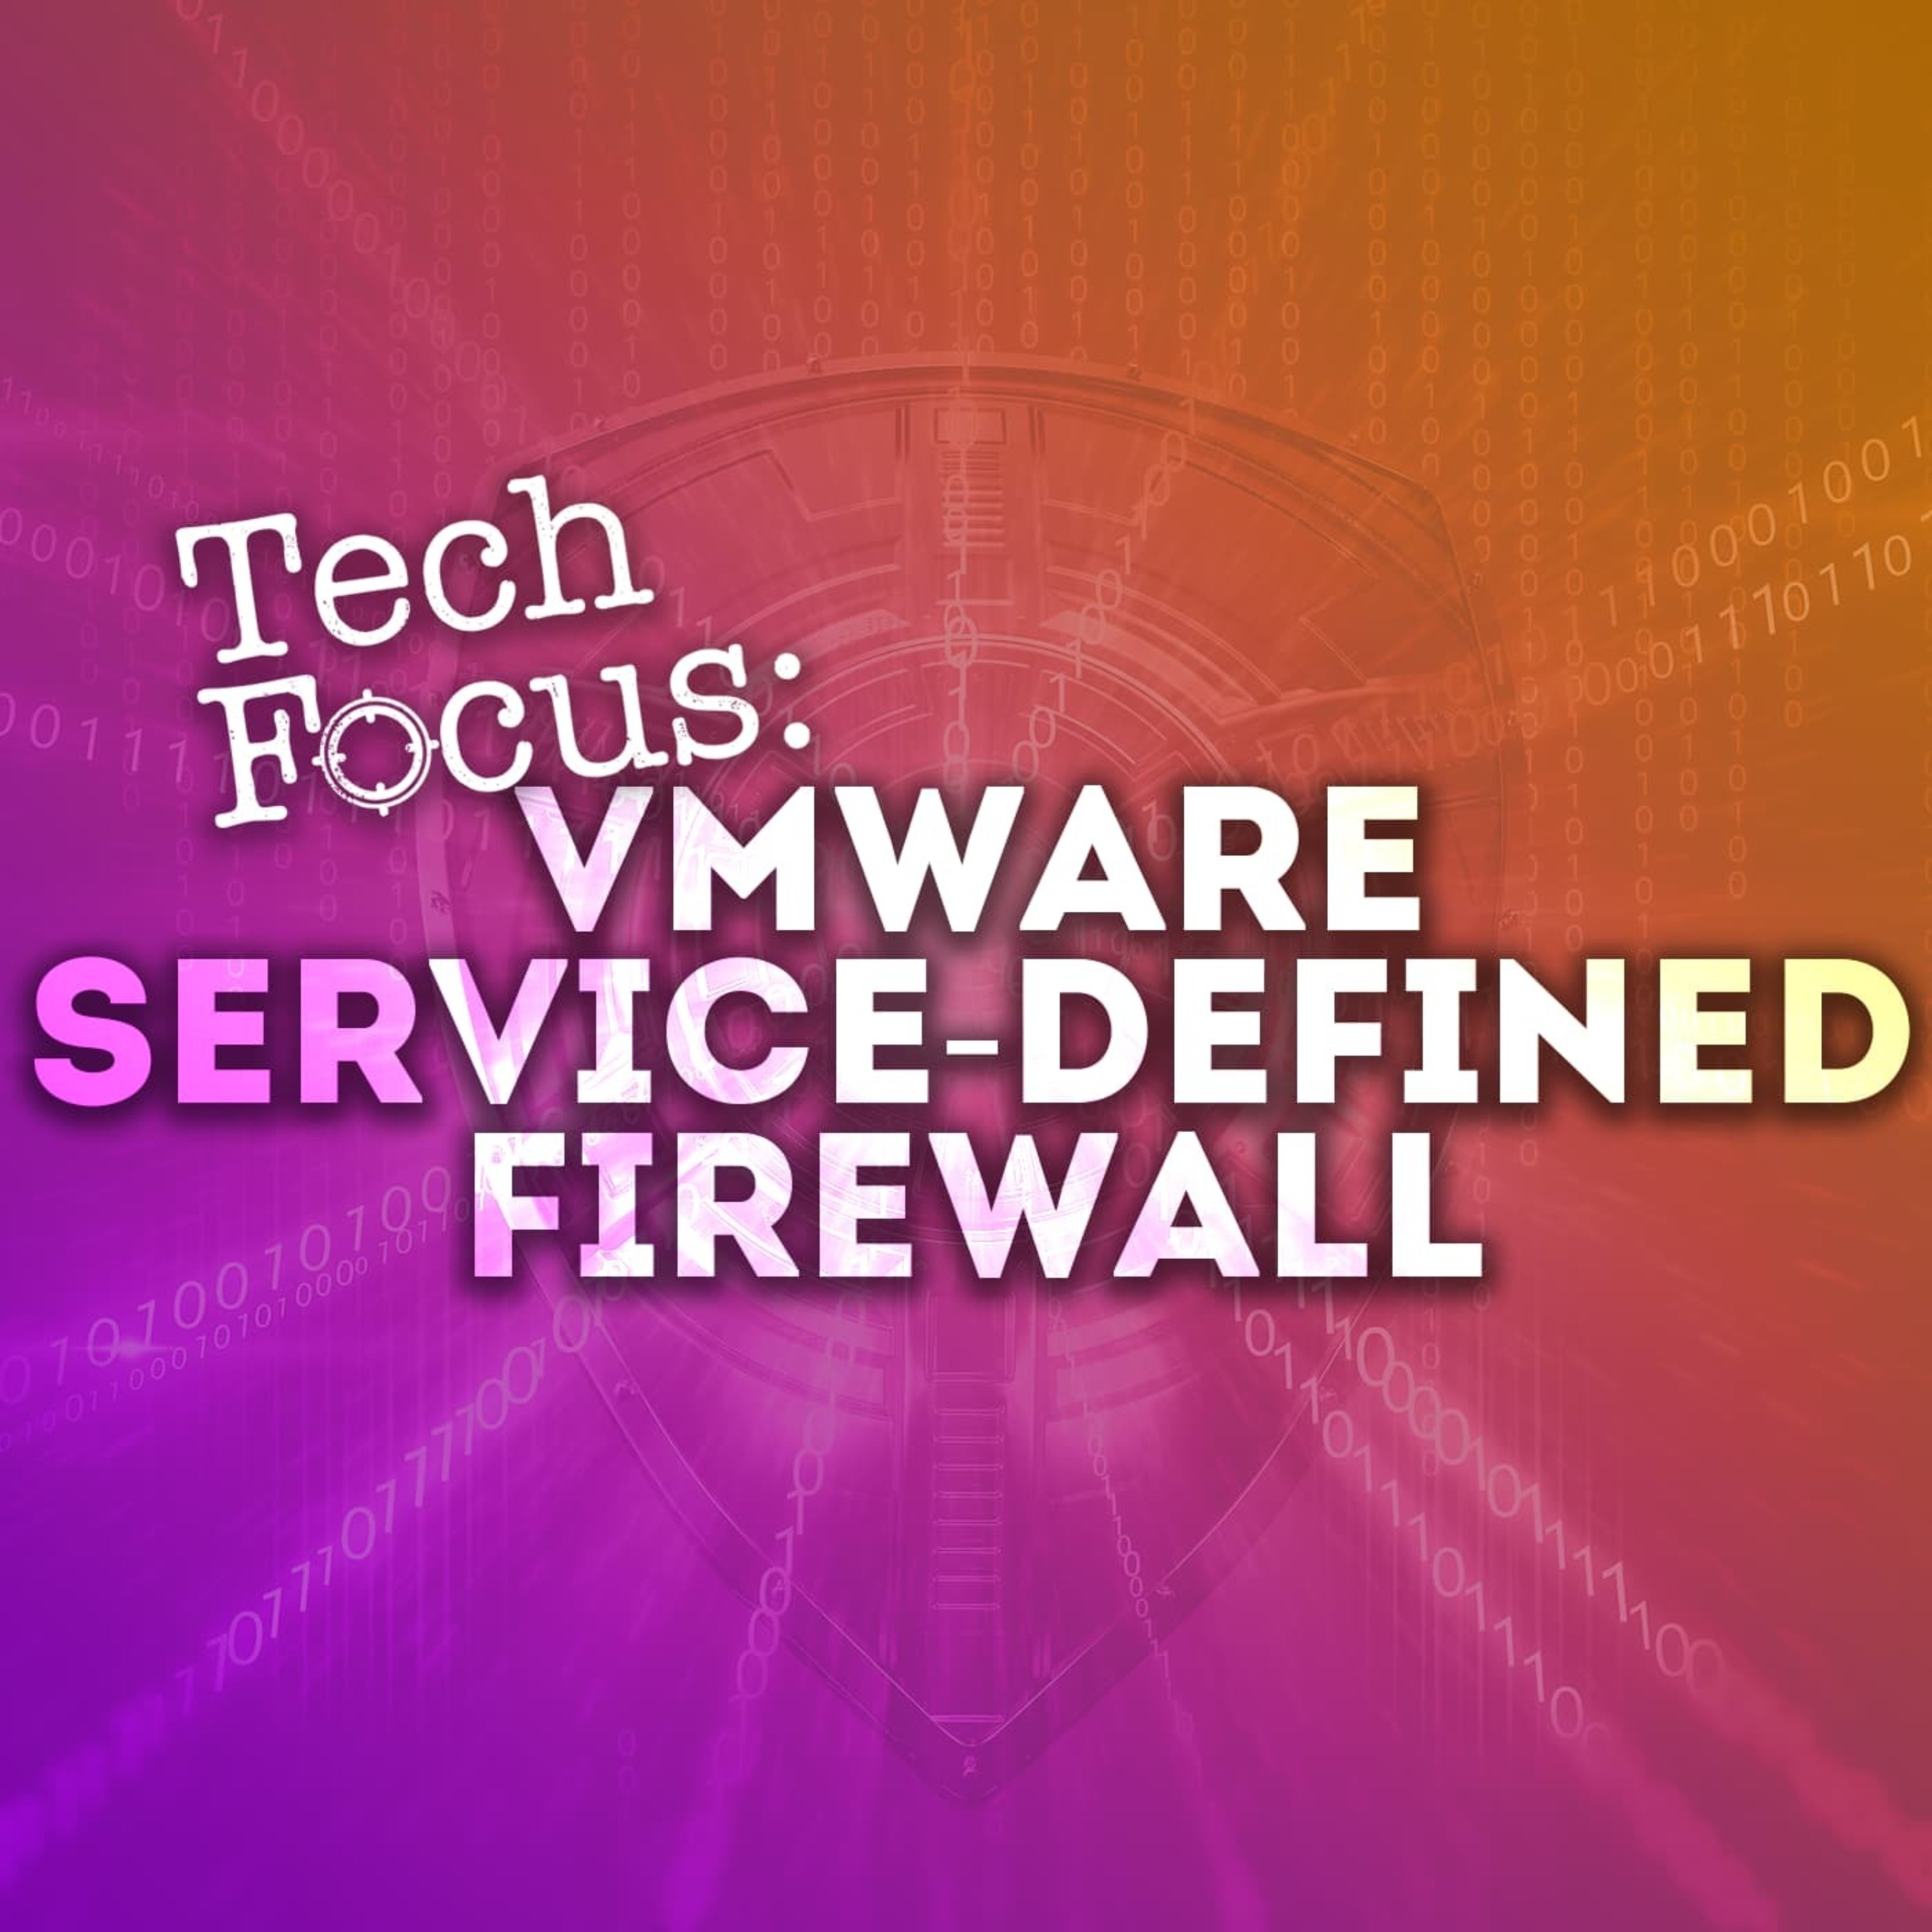 VMware Service-Defined Firewall